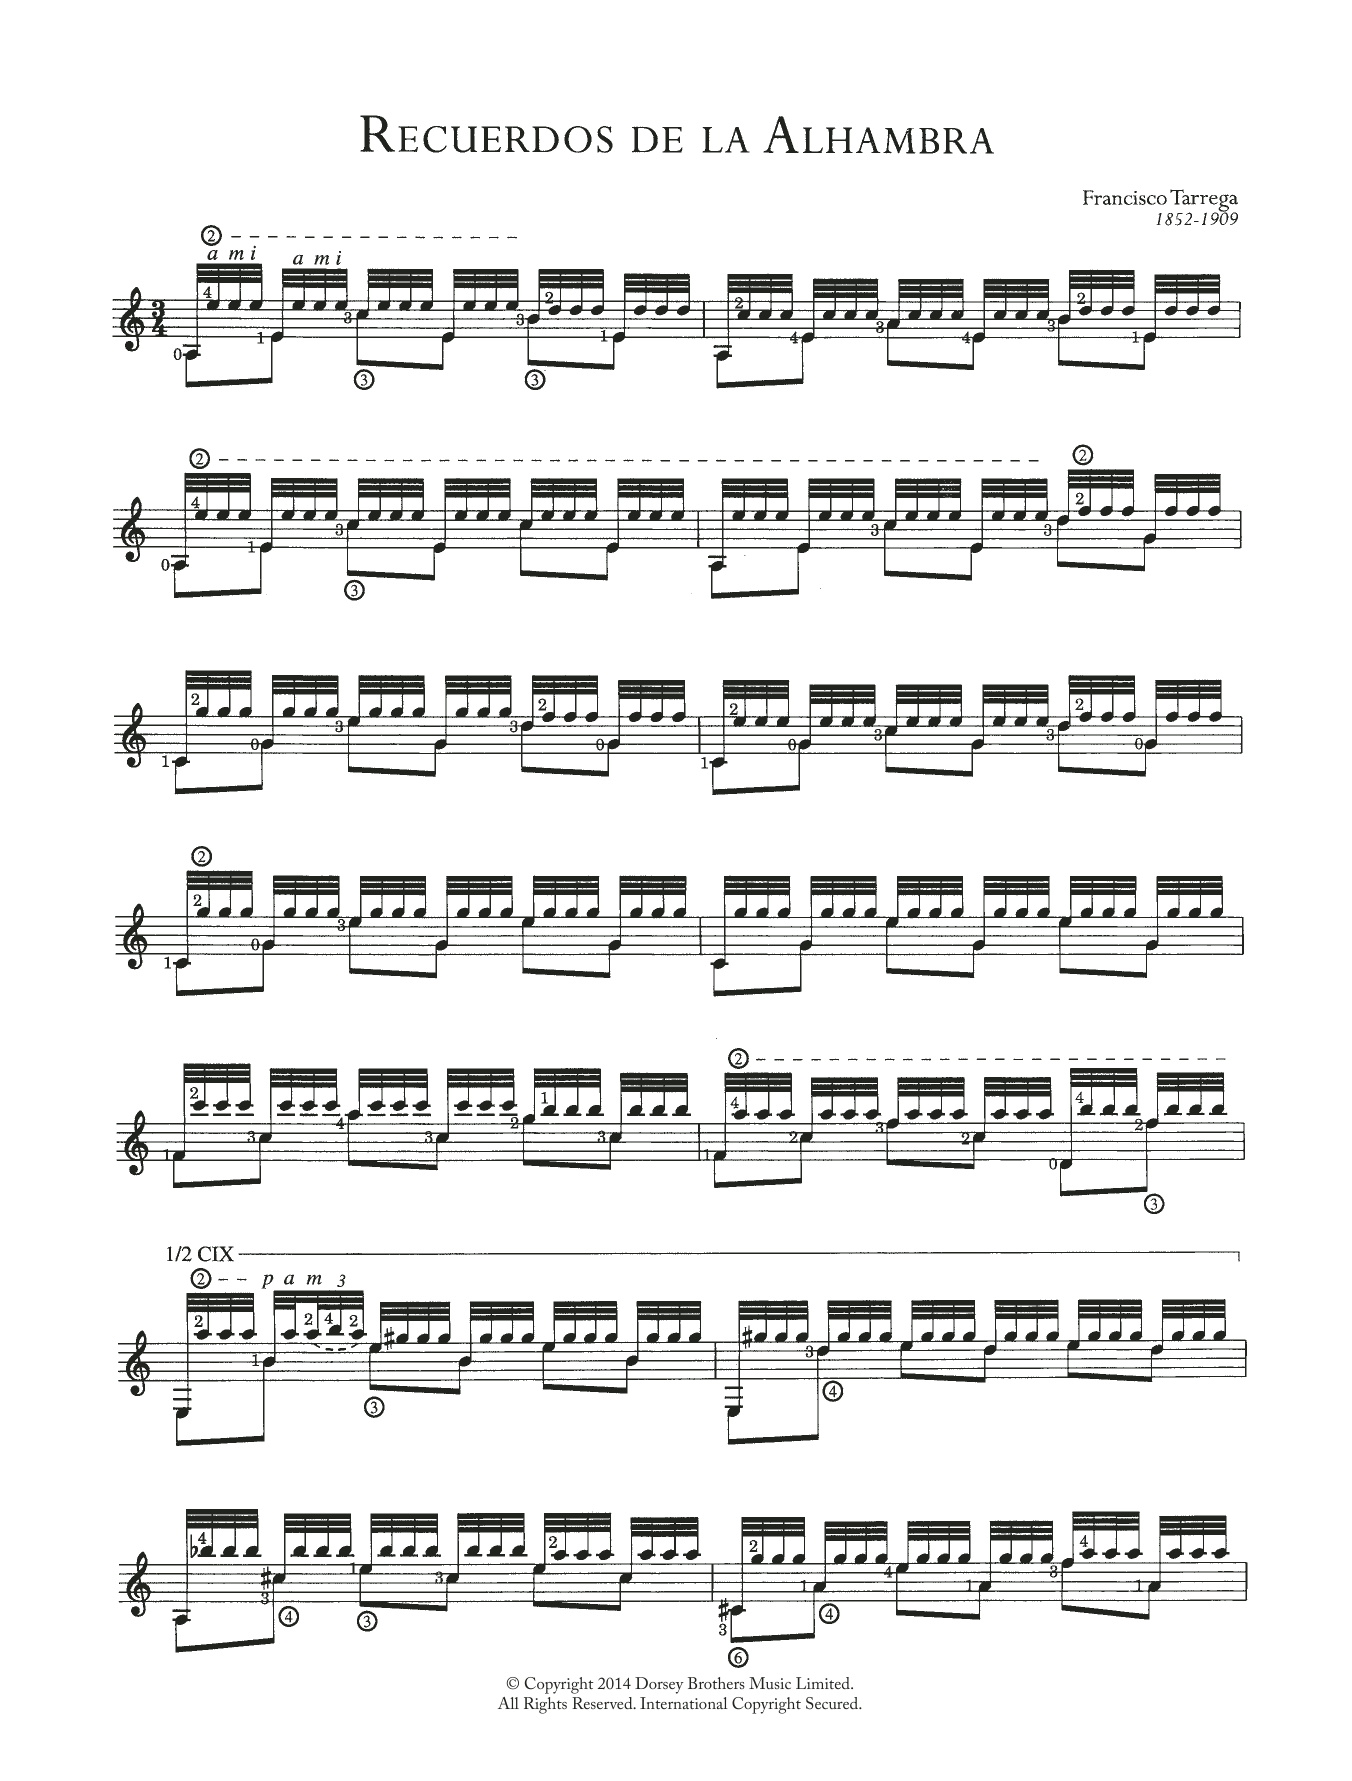 Download Francisco Tárrega Recuerdos de la Alhambra Sheet Music and learn how to play String Solo PDF digital score in minutes